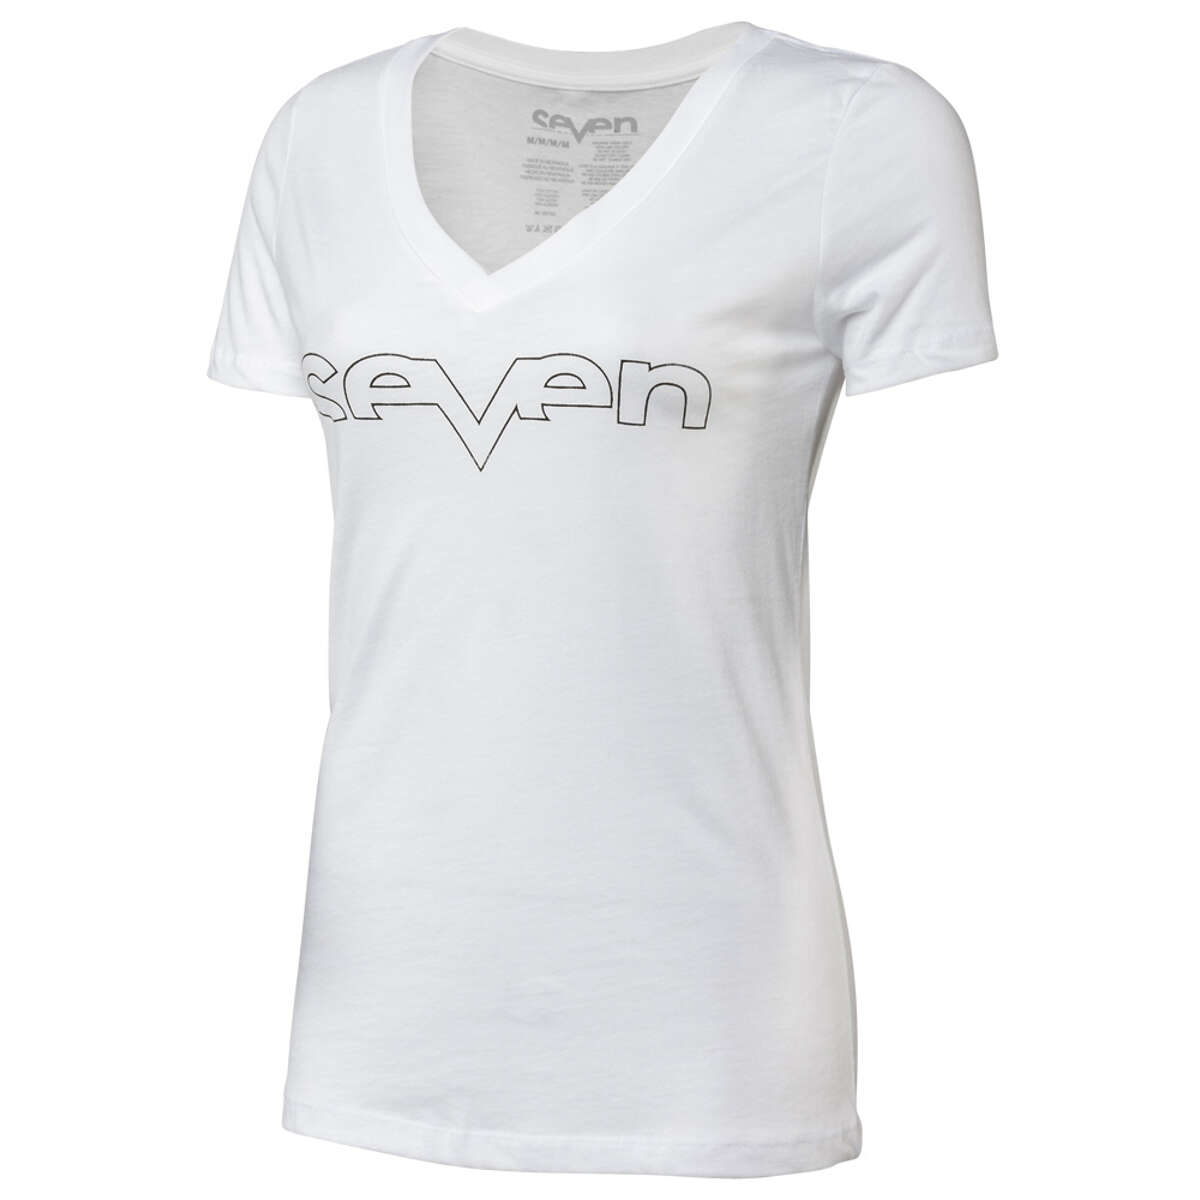 Seven MX Girls T-Shirt Brand Foil White